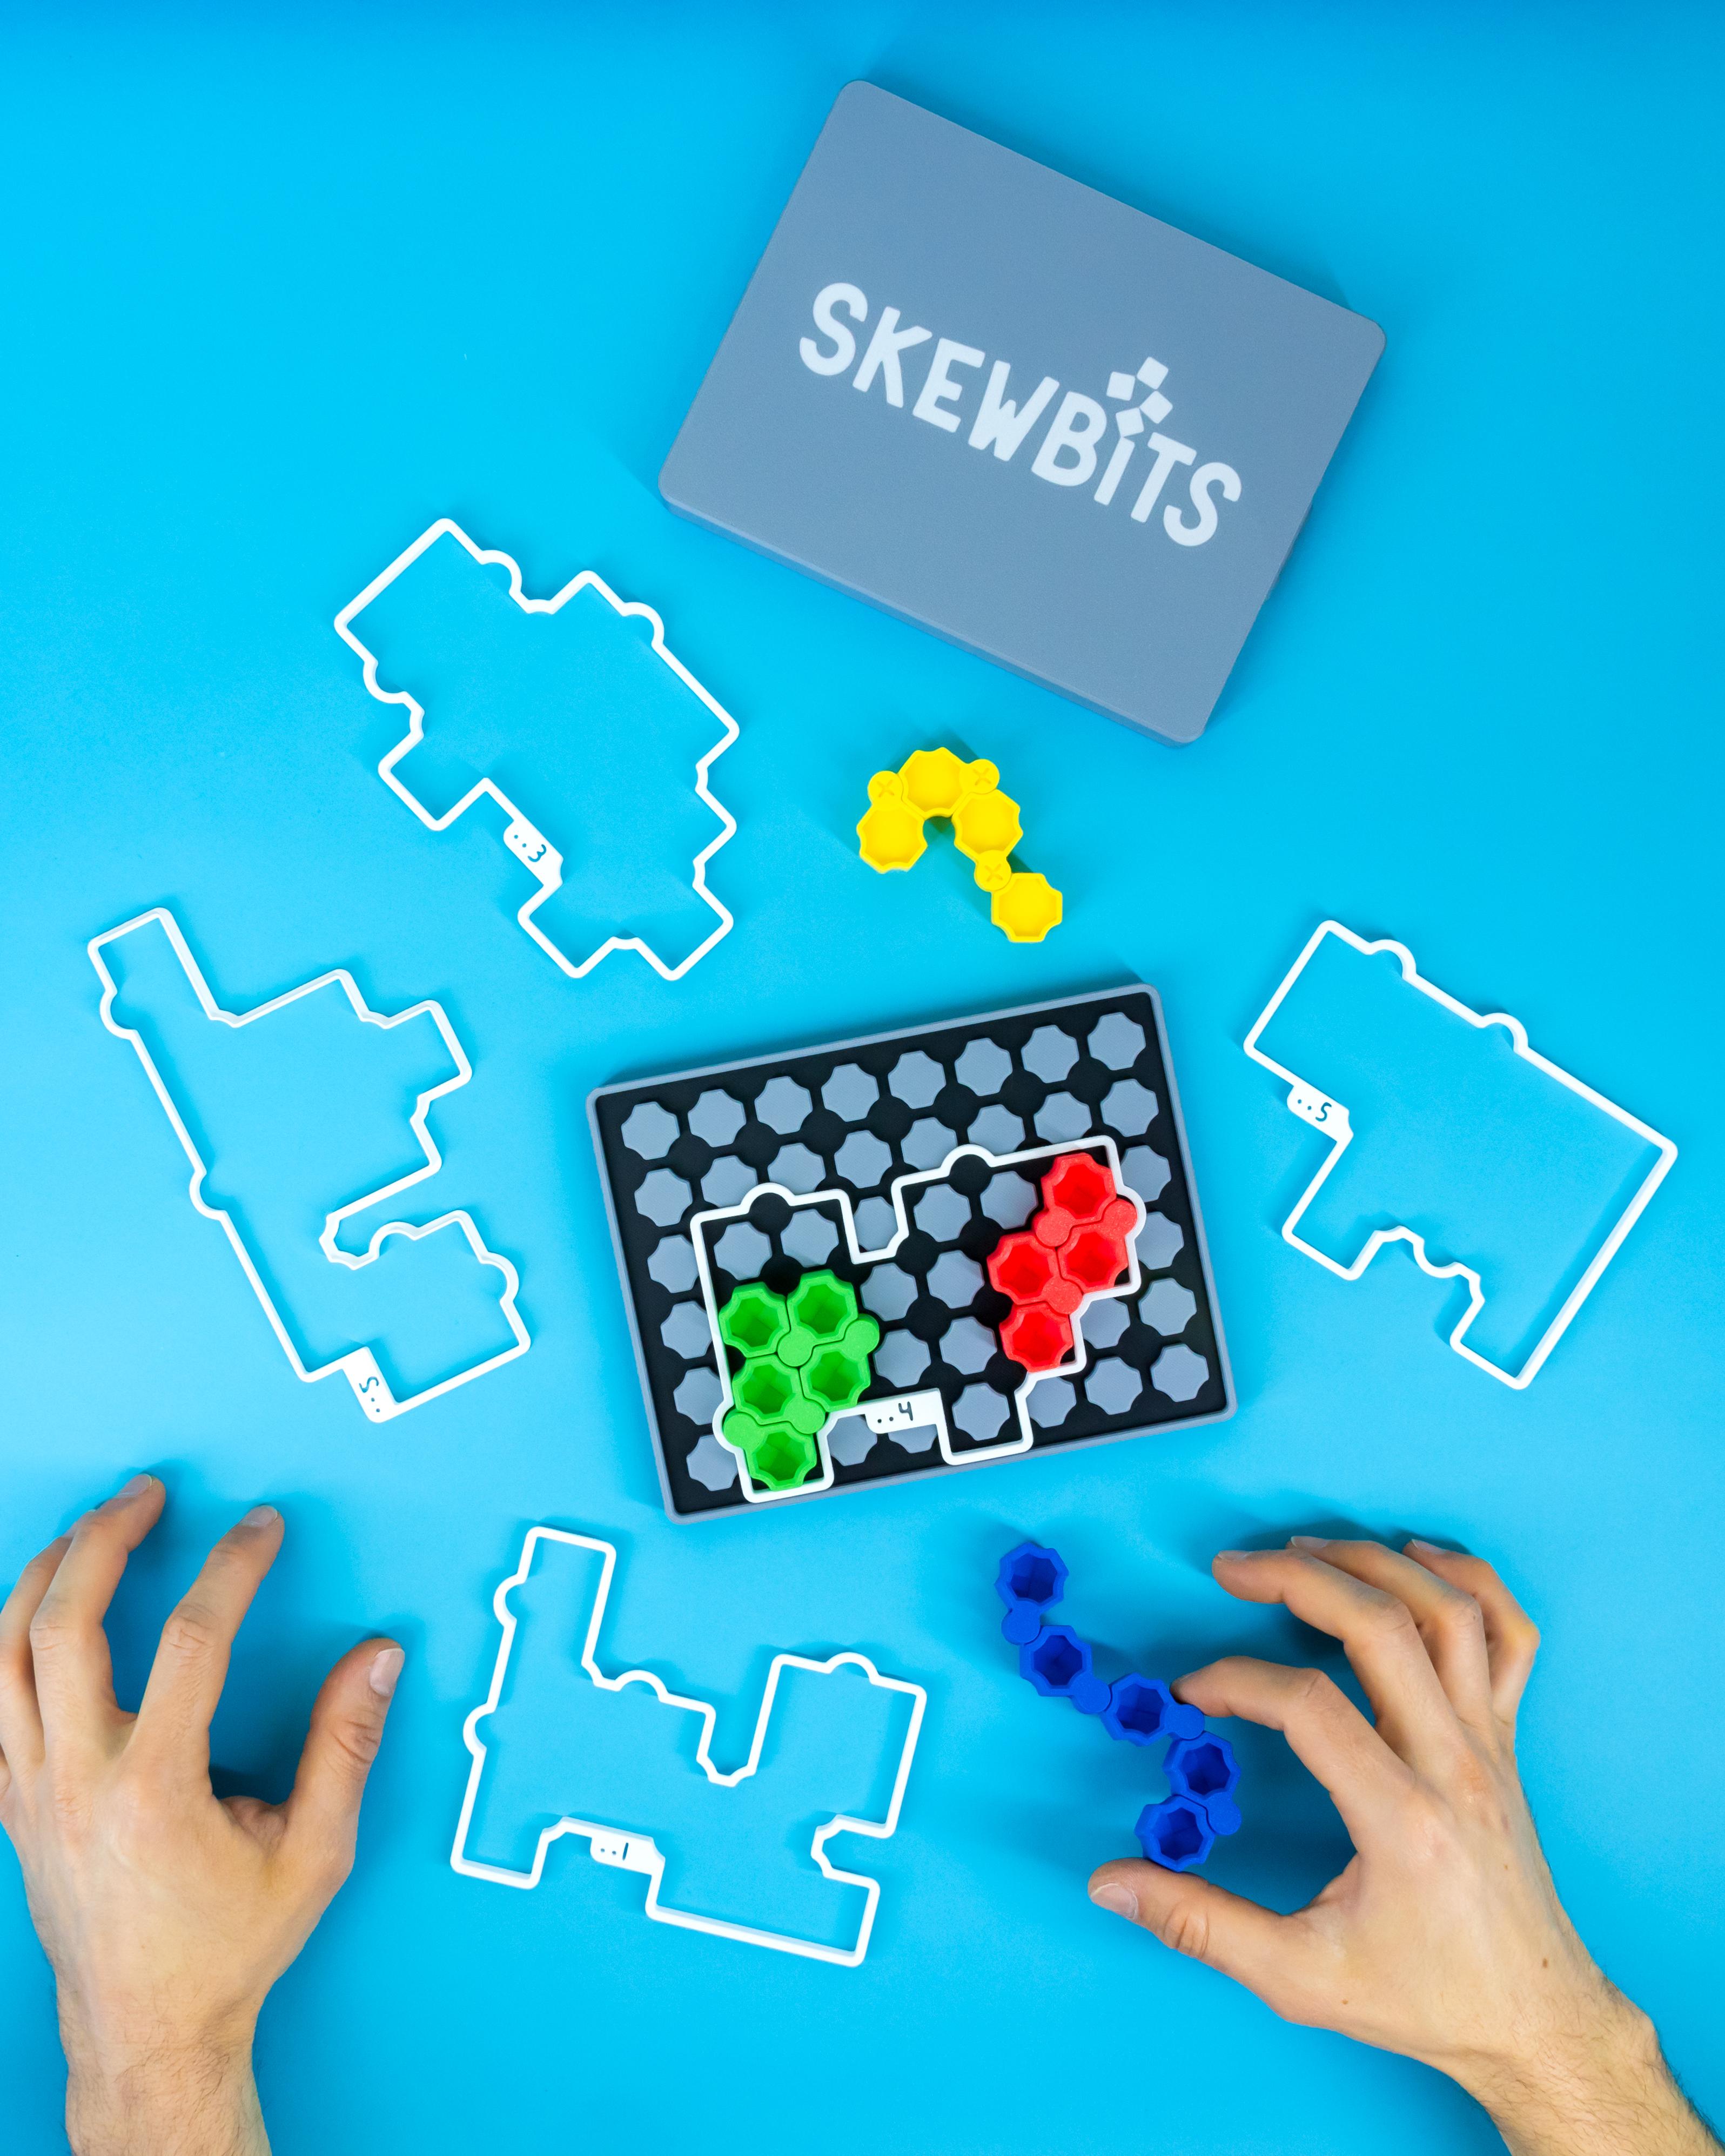 SKEWBITS v2.0 Puzzle Game // Premium Set + Problems 001-010 3d model